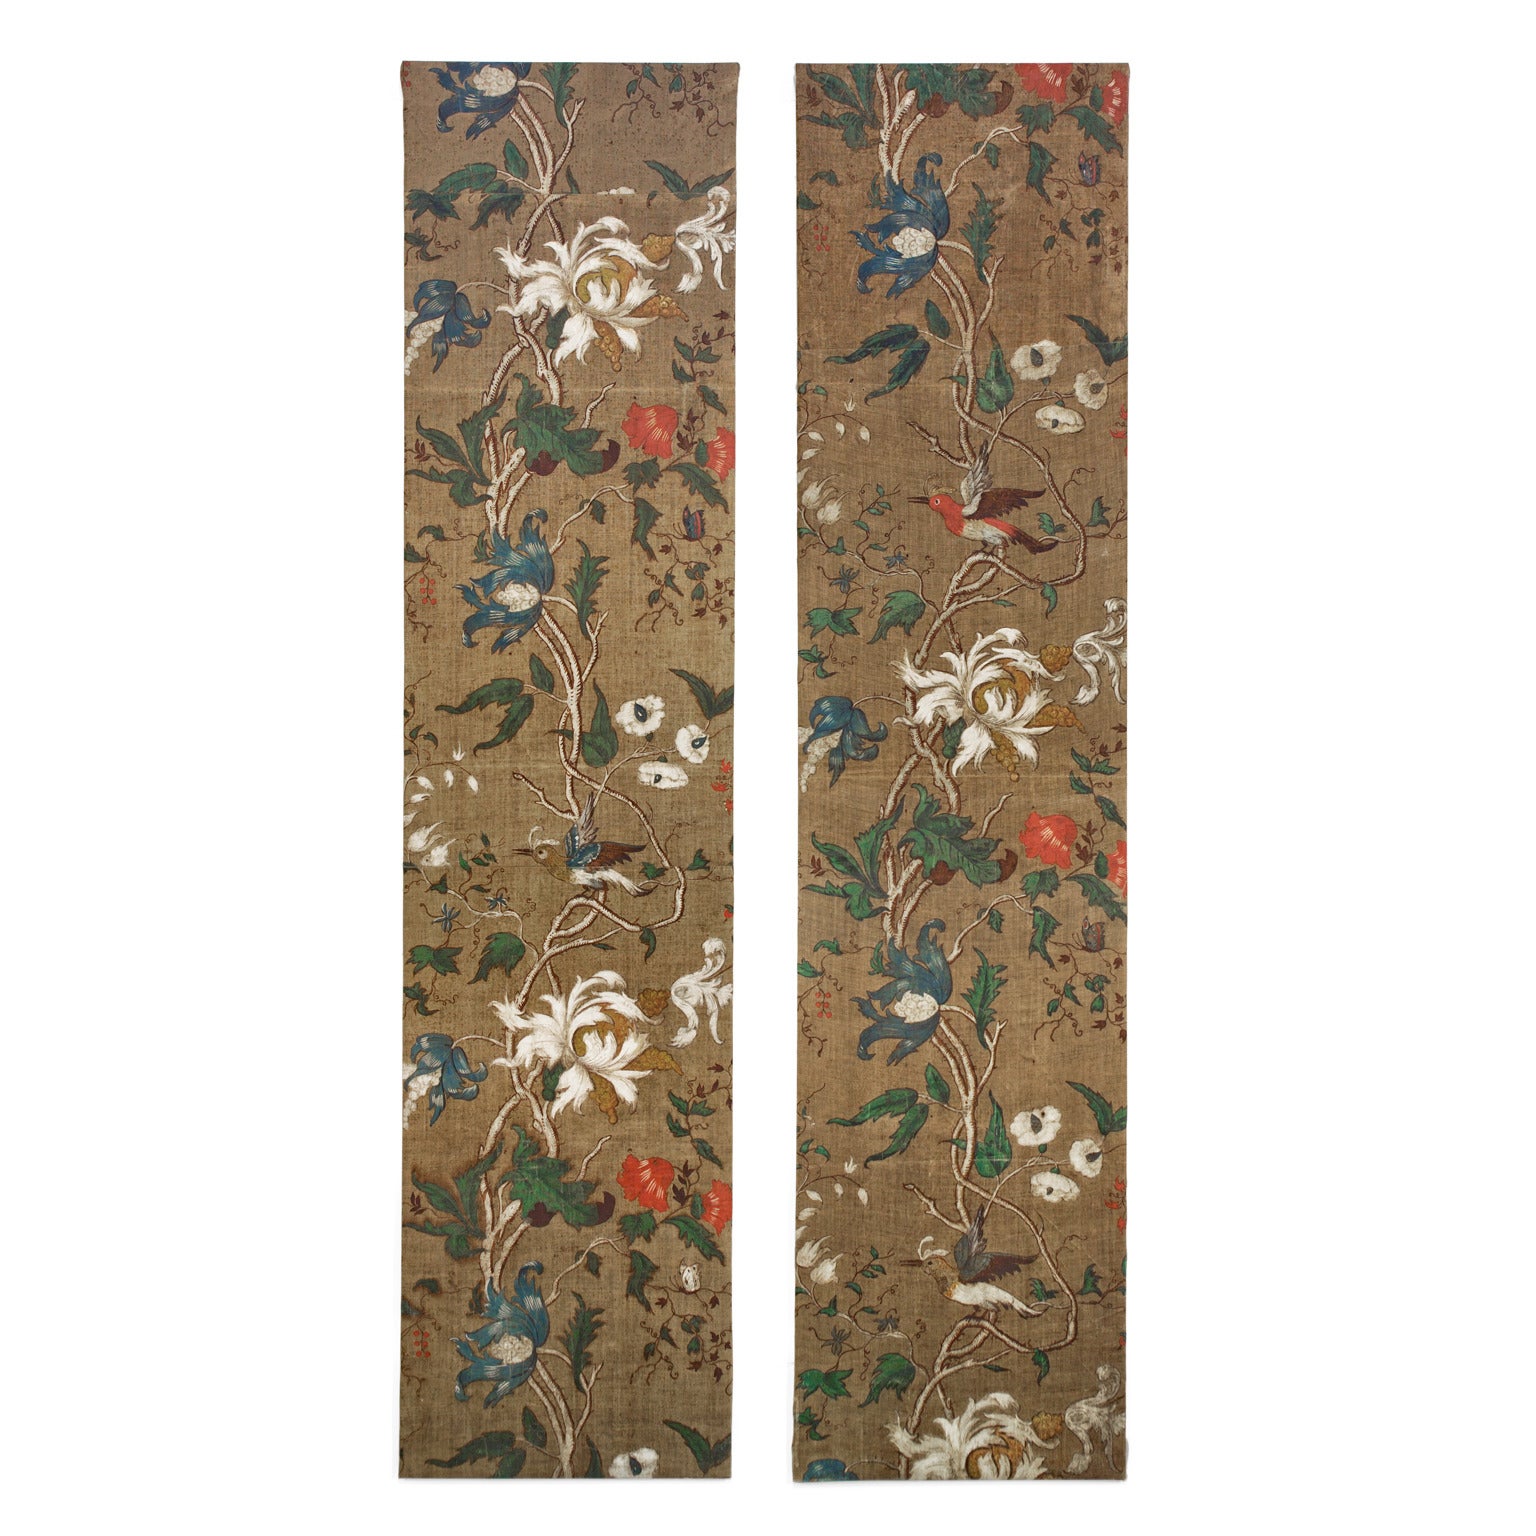 18th Century Handpainted Linen Textiles